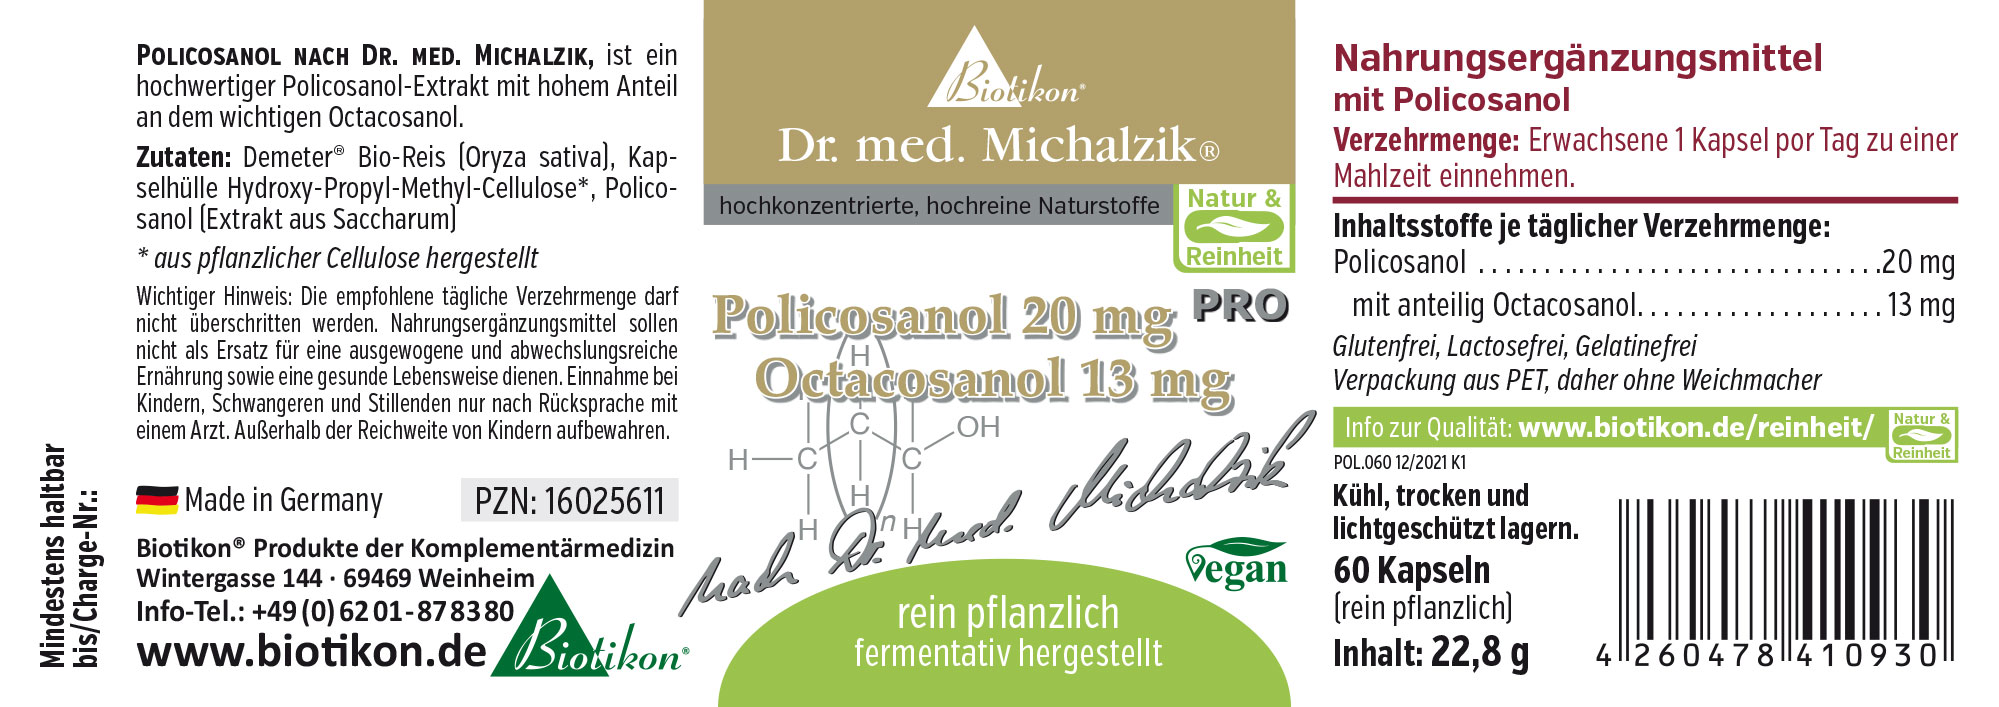 Policosanol PRO nach Dr. med. Michalzik